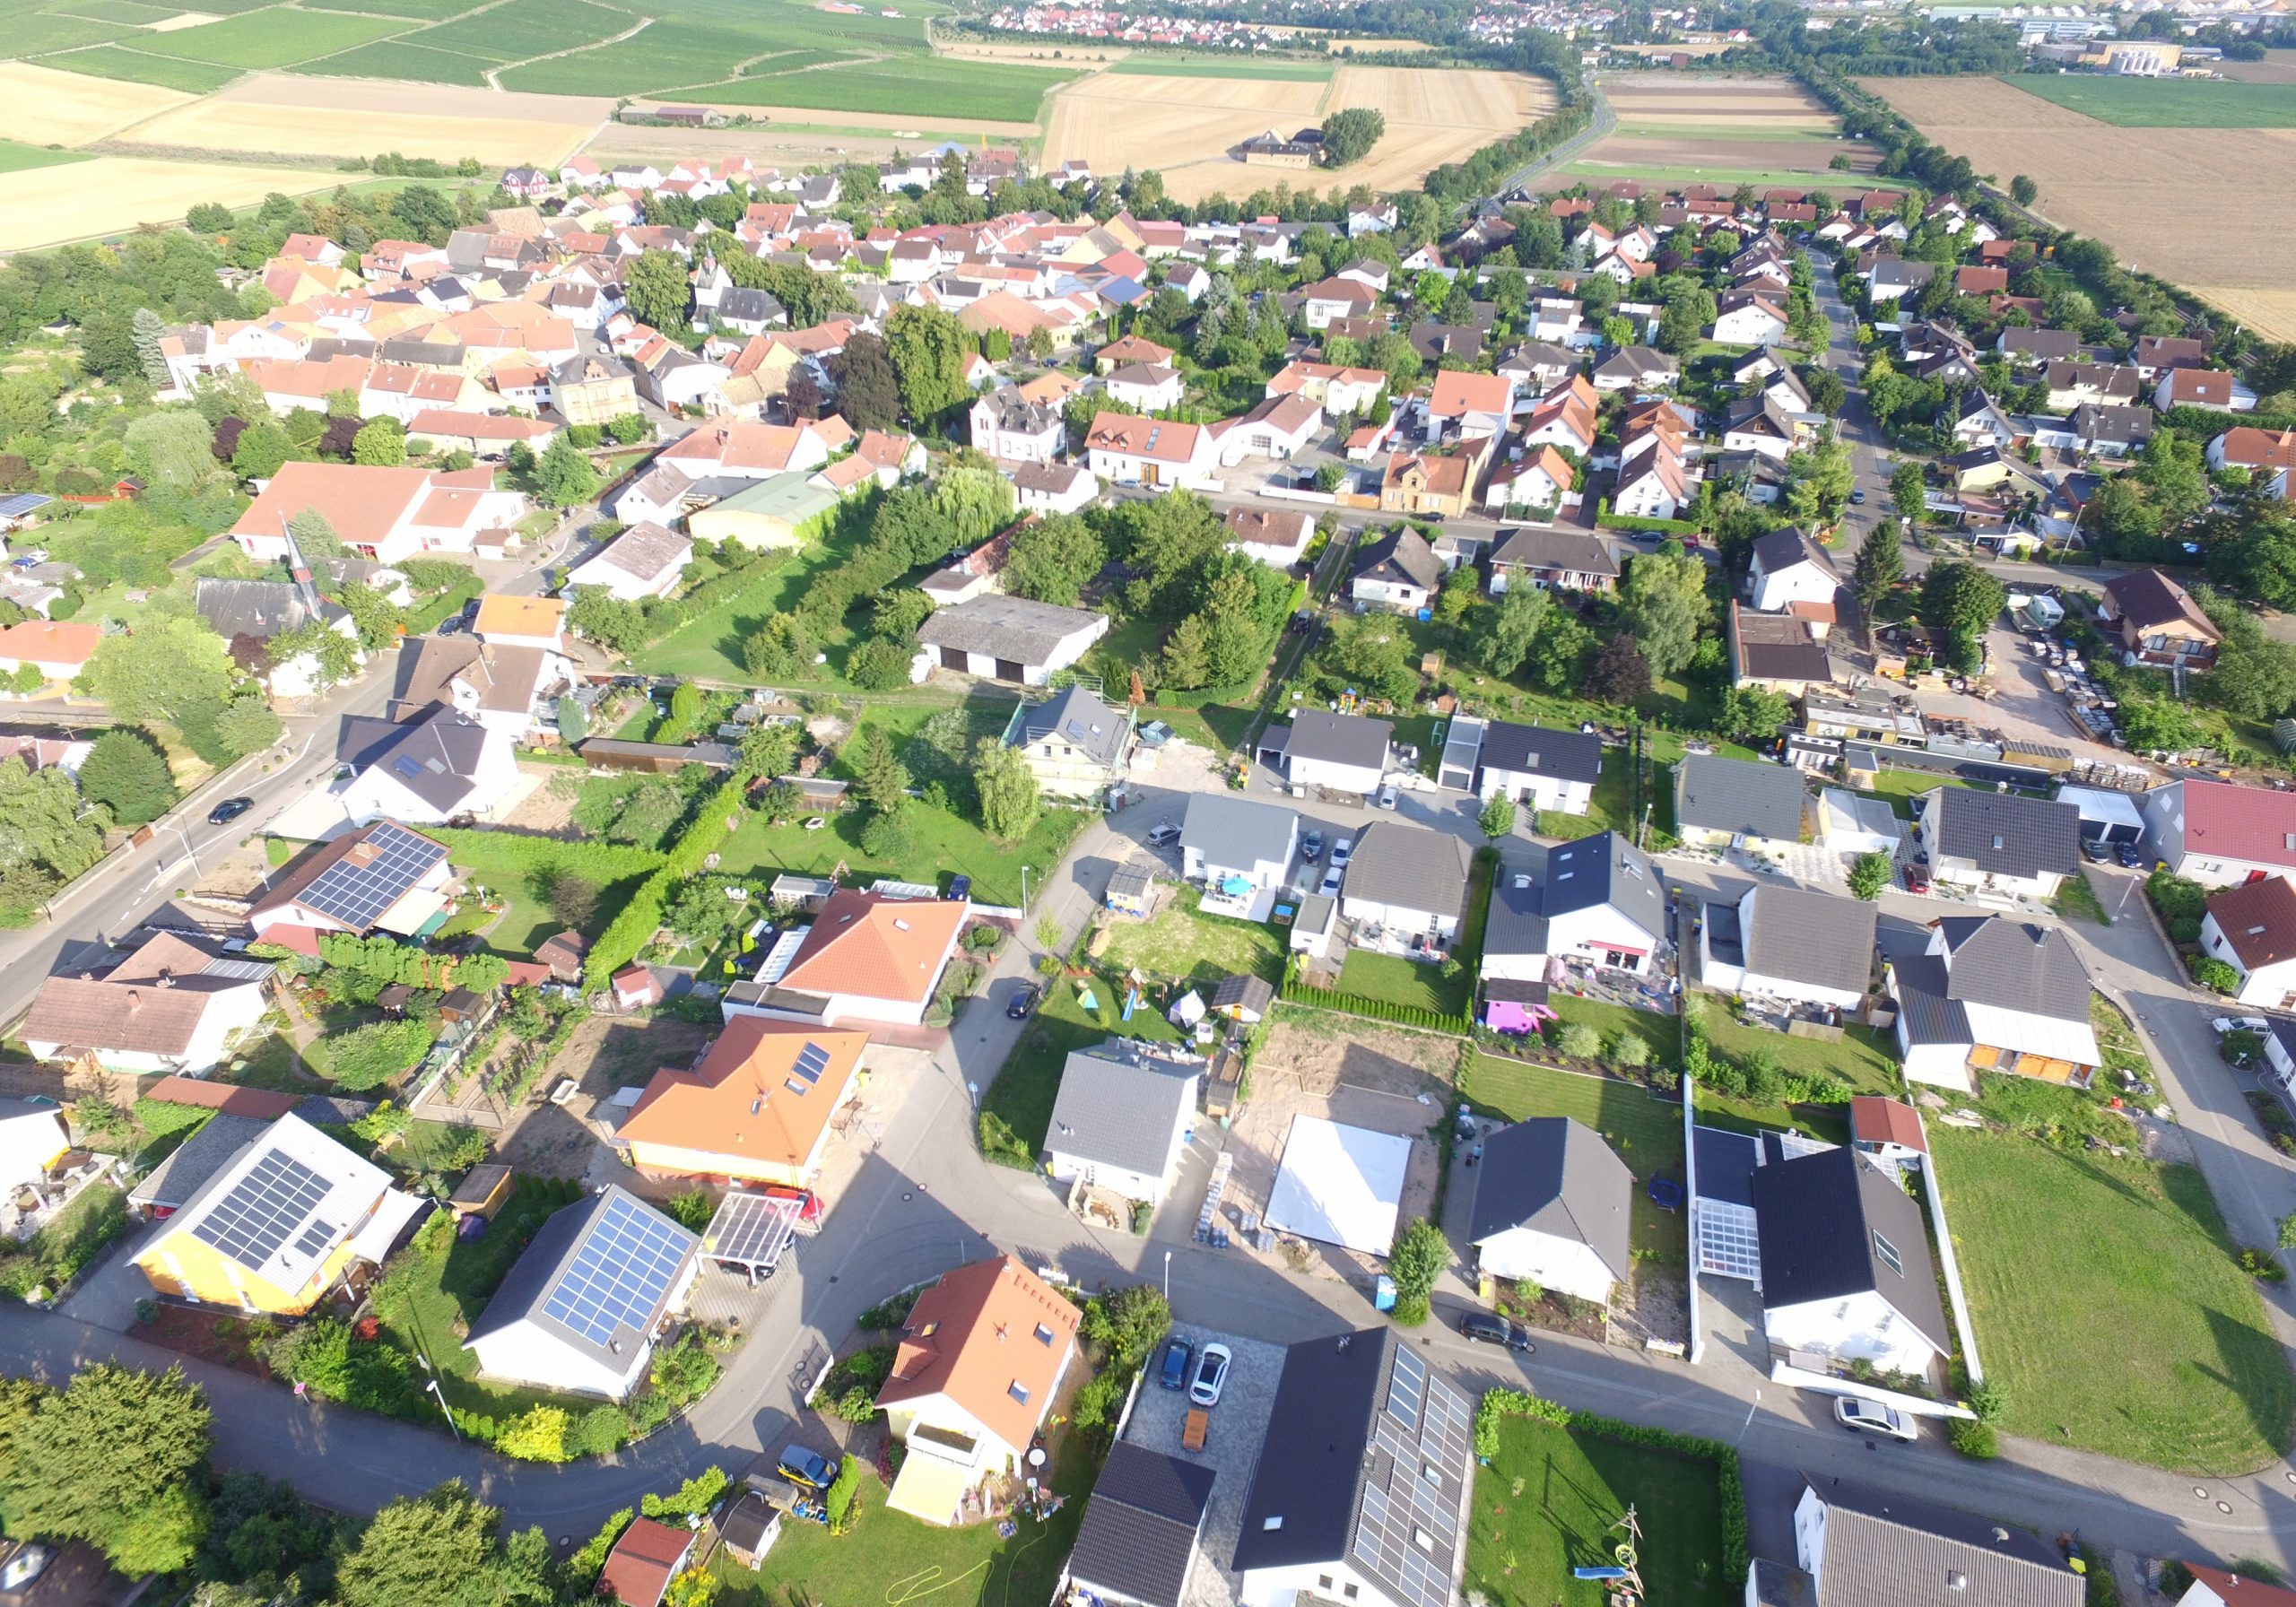 Aerial view of neighborhood during warmer months